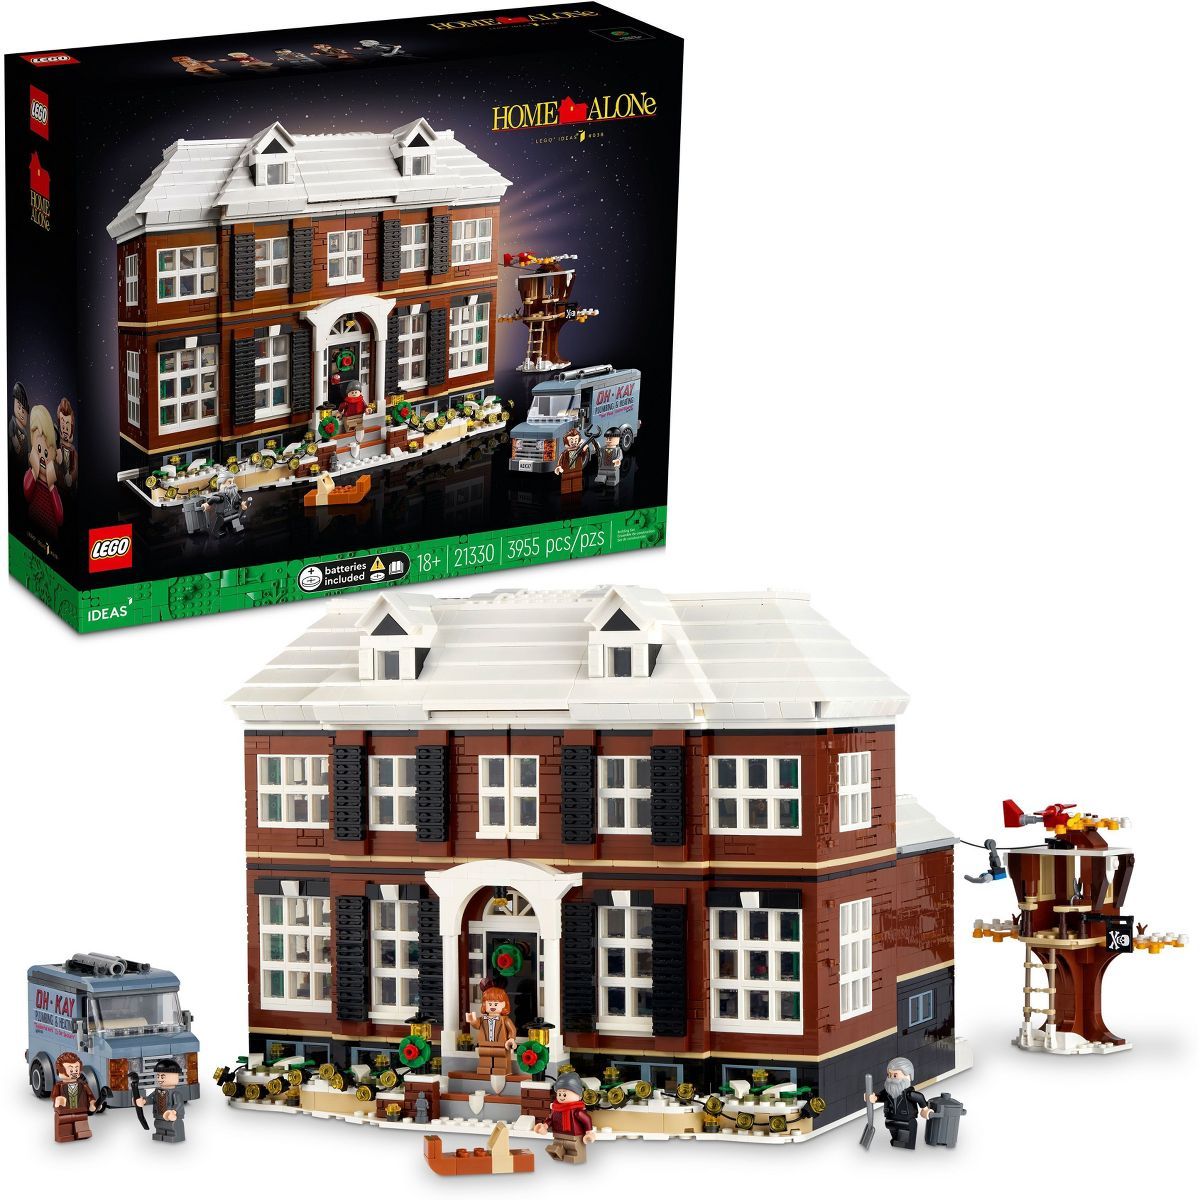 LEGO Ideas Home Alone McCallisters House Building Set 21330 | Target